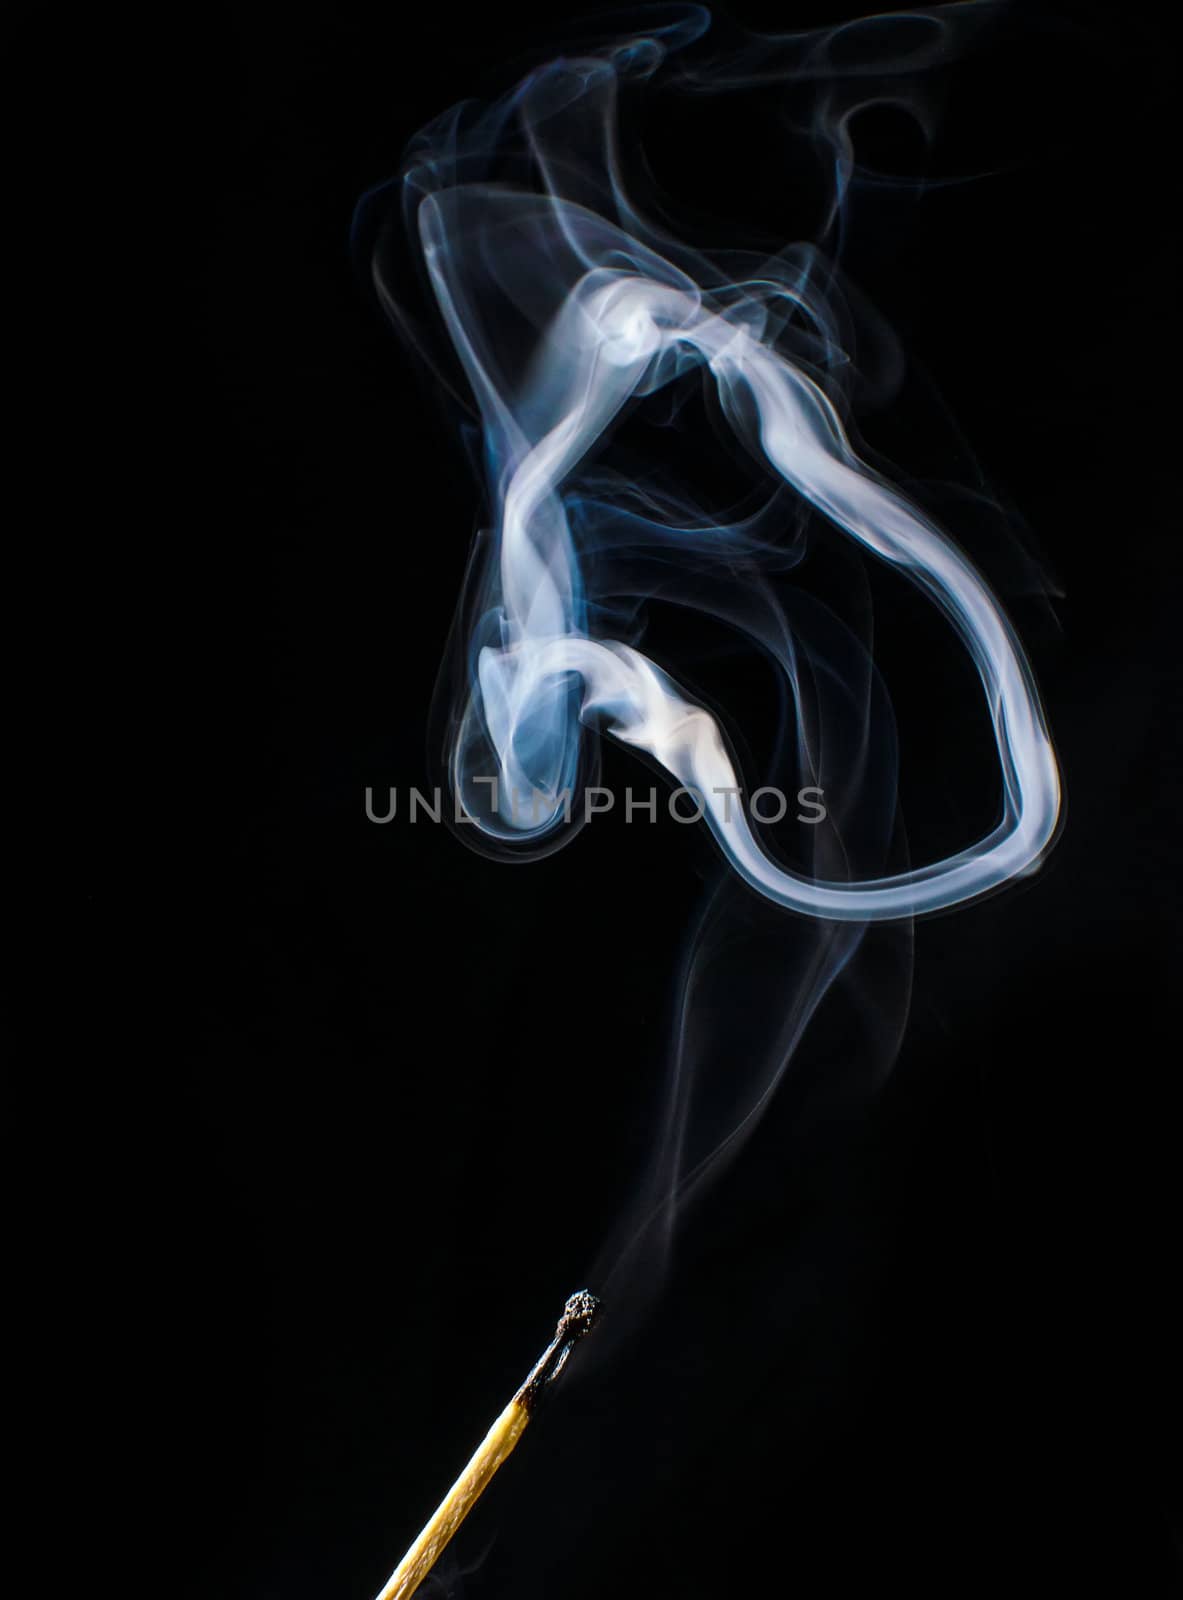 Fireless match and circle of smoke on black background by dmitrimaruta